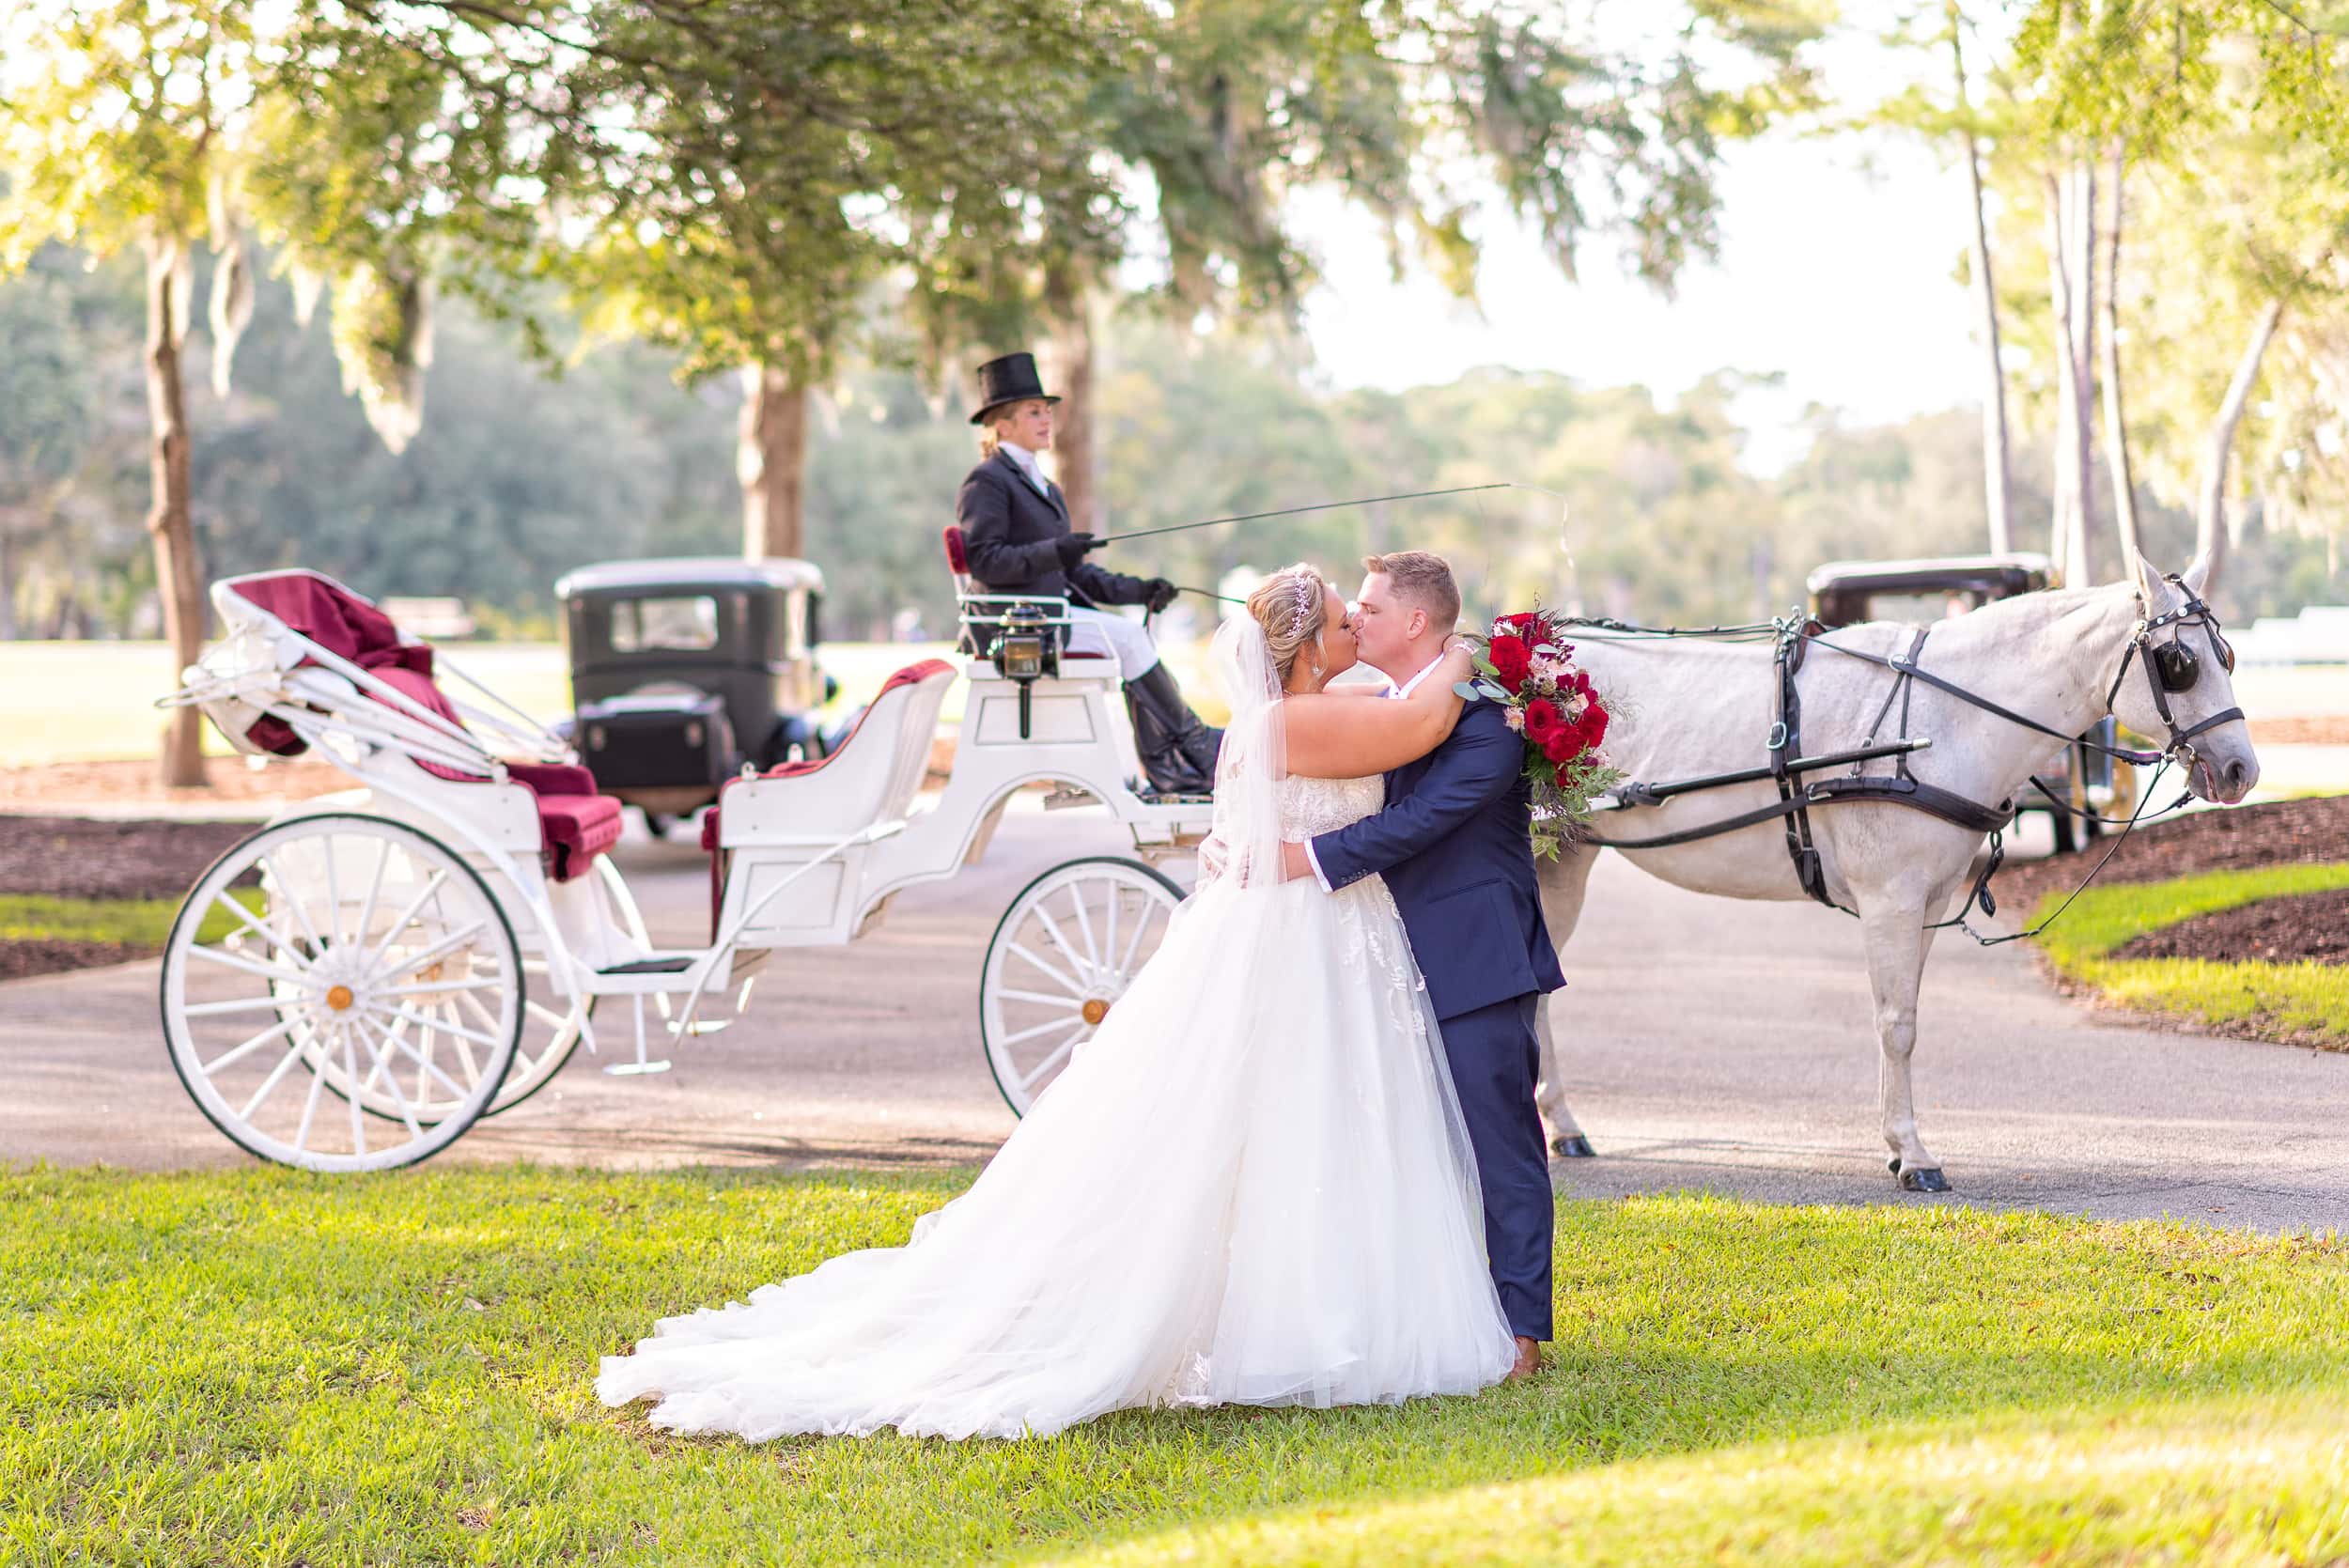 Beautiful wedding yesterday with horse drawn carriage - Pawleys Plantation